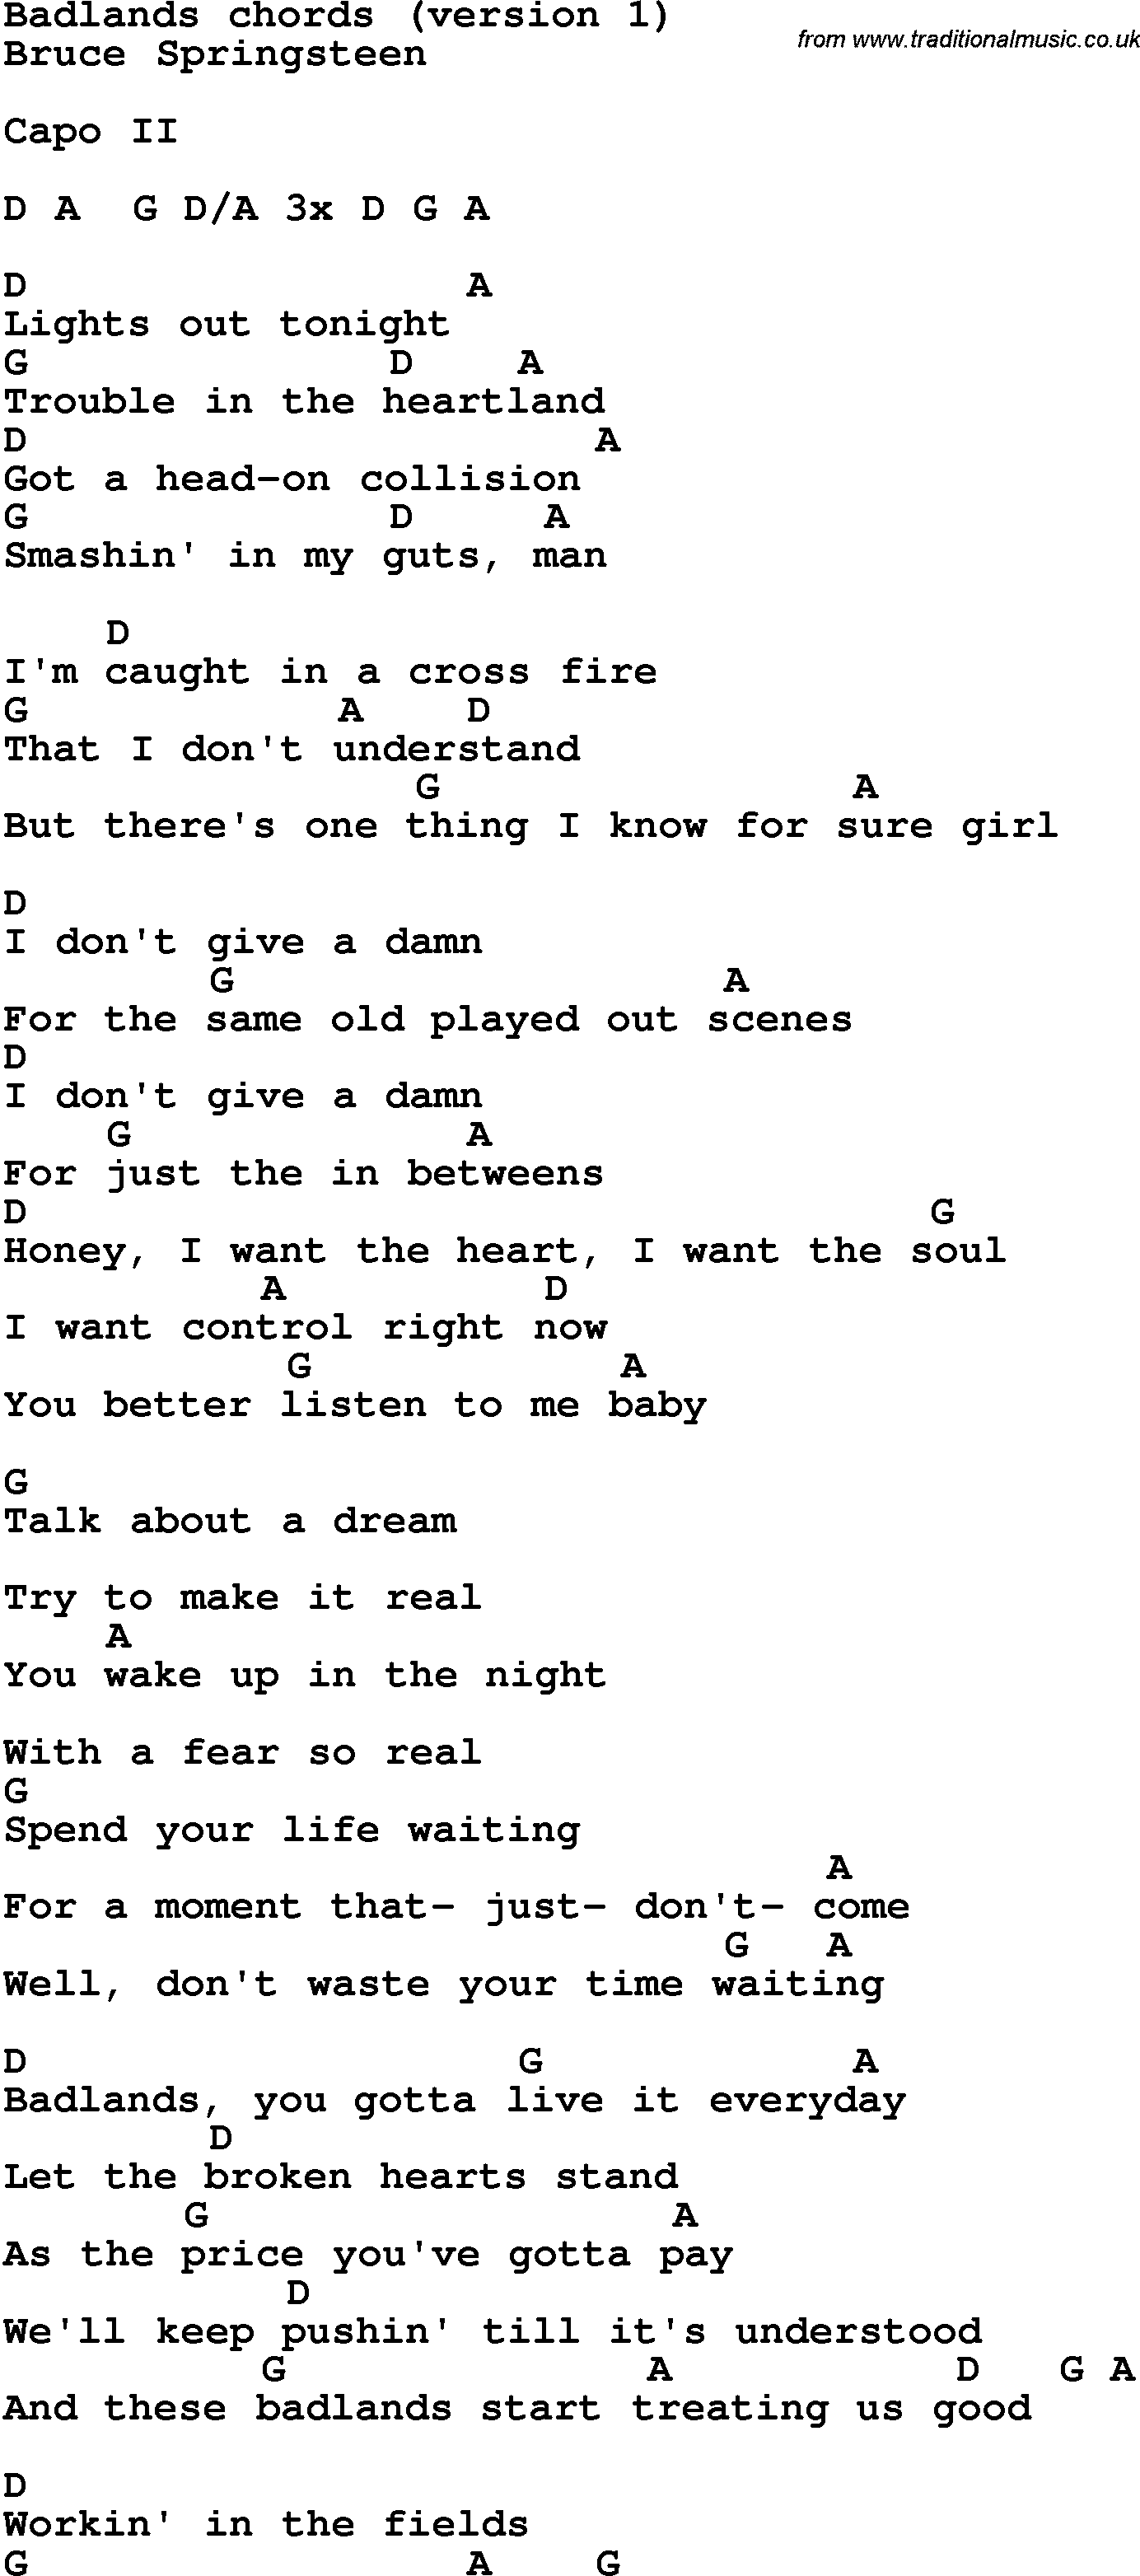 Song Lyrics with guitar chords for Badlands